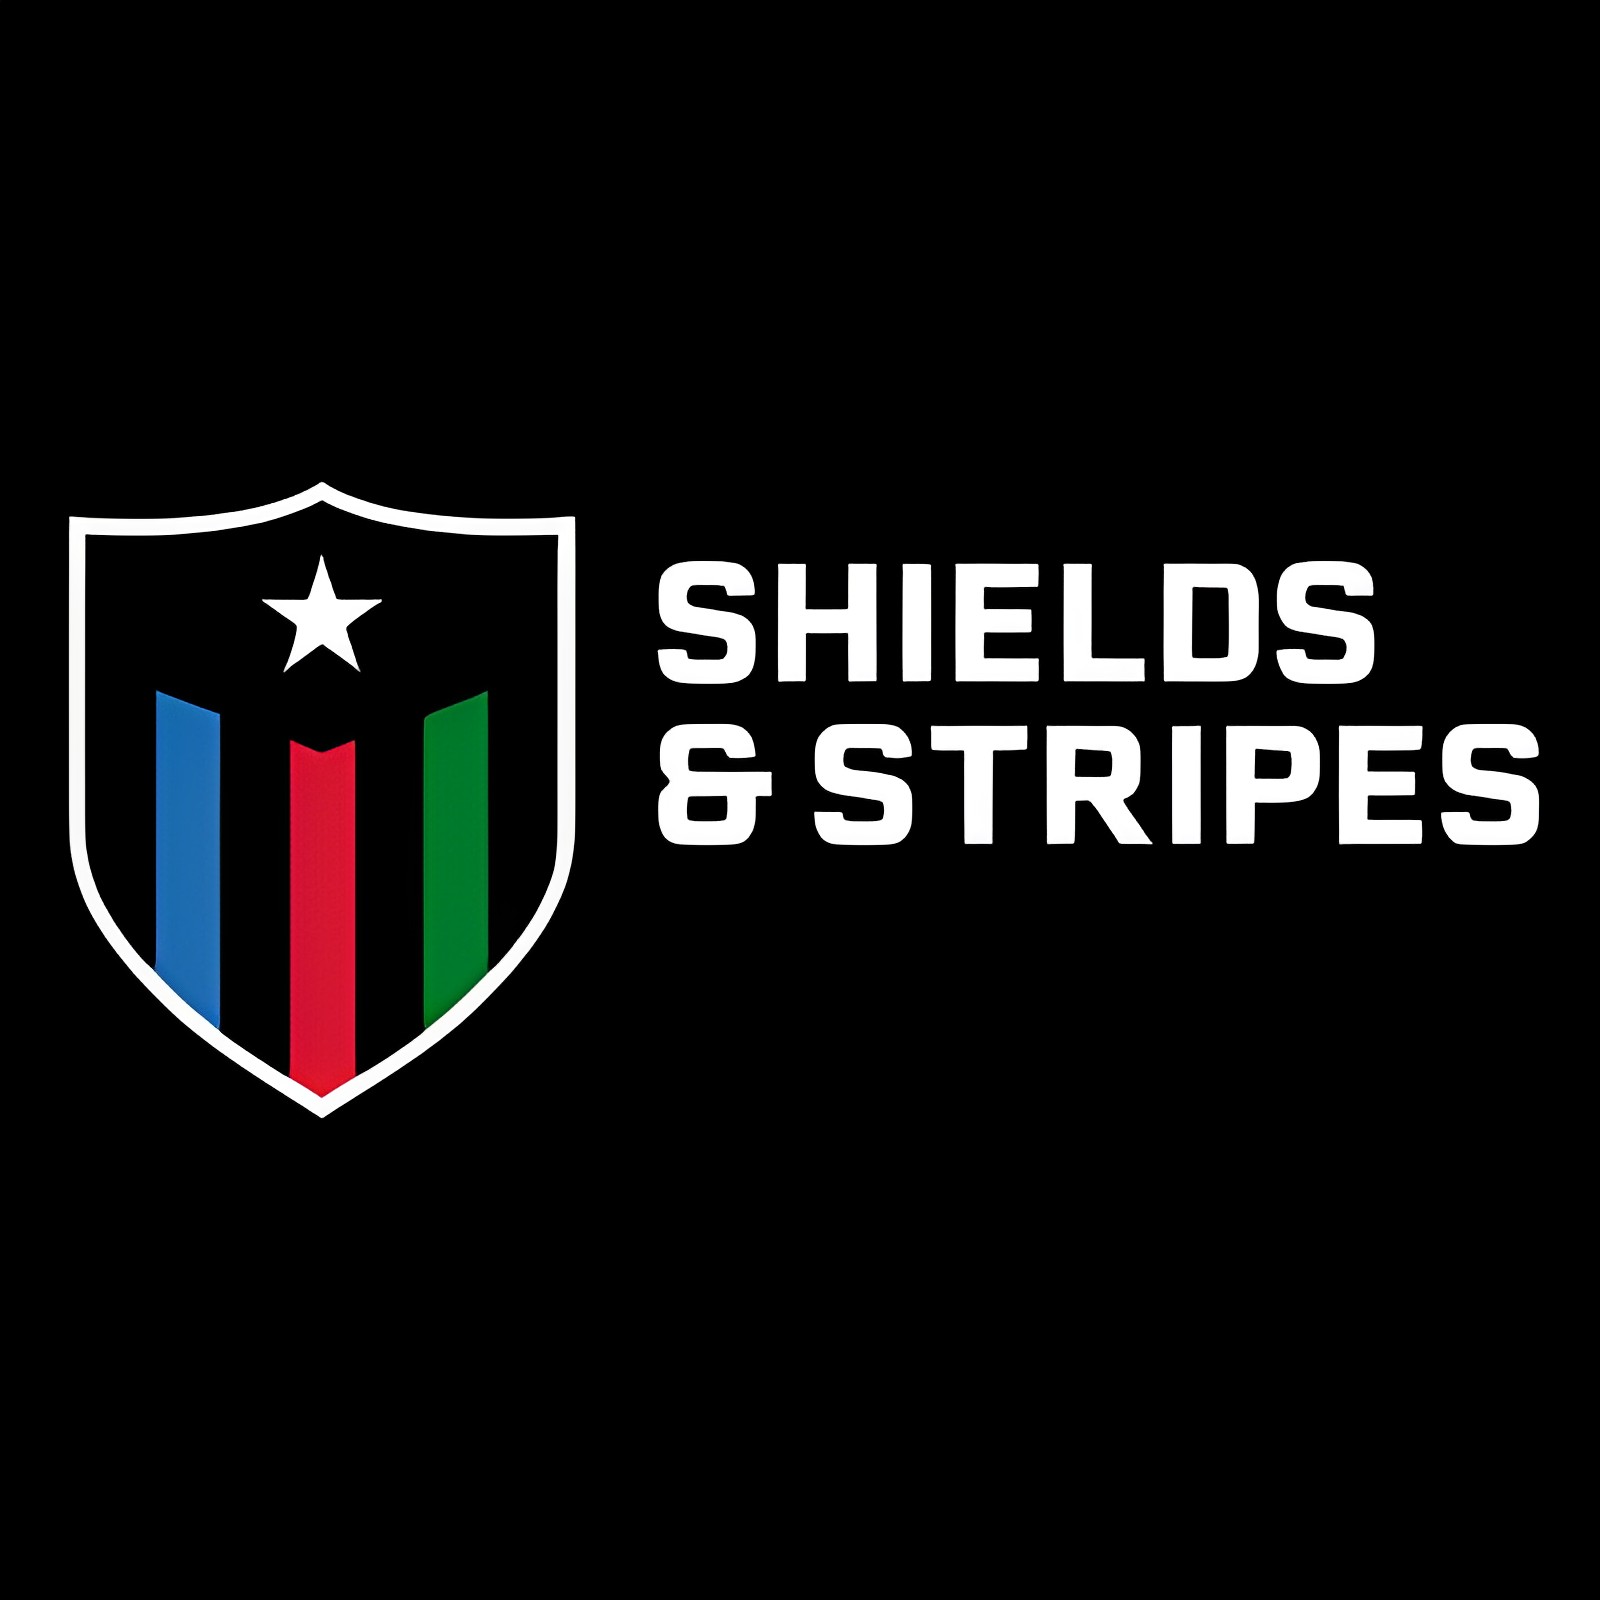 shields & stripes logo